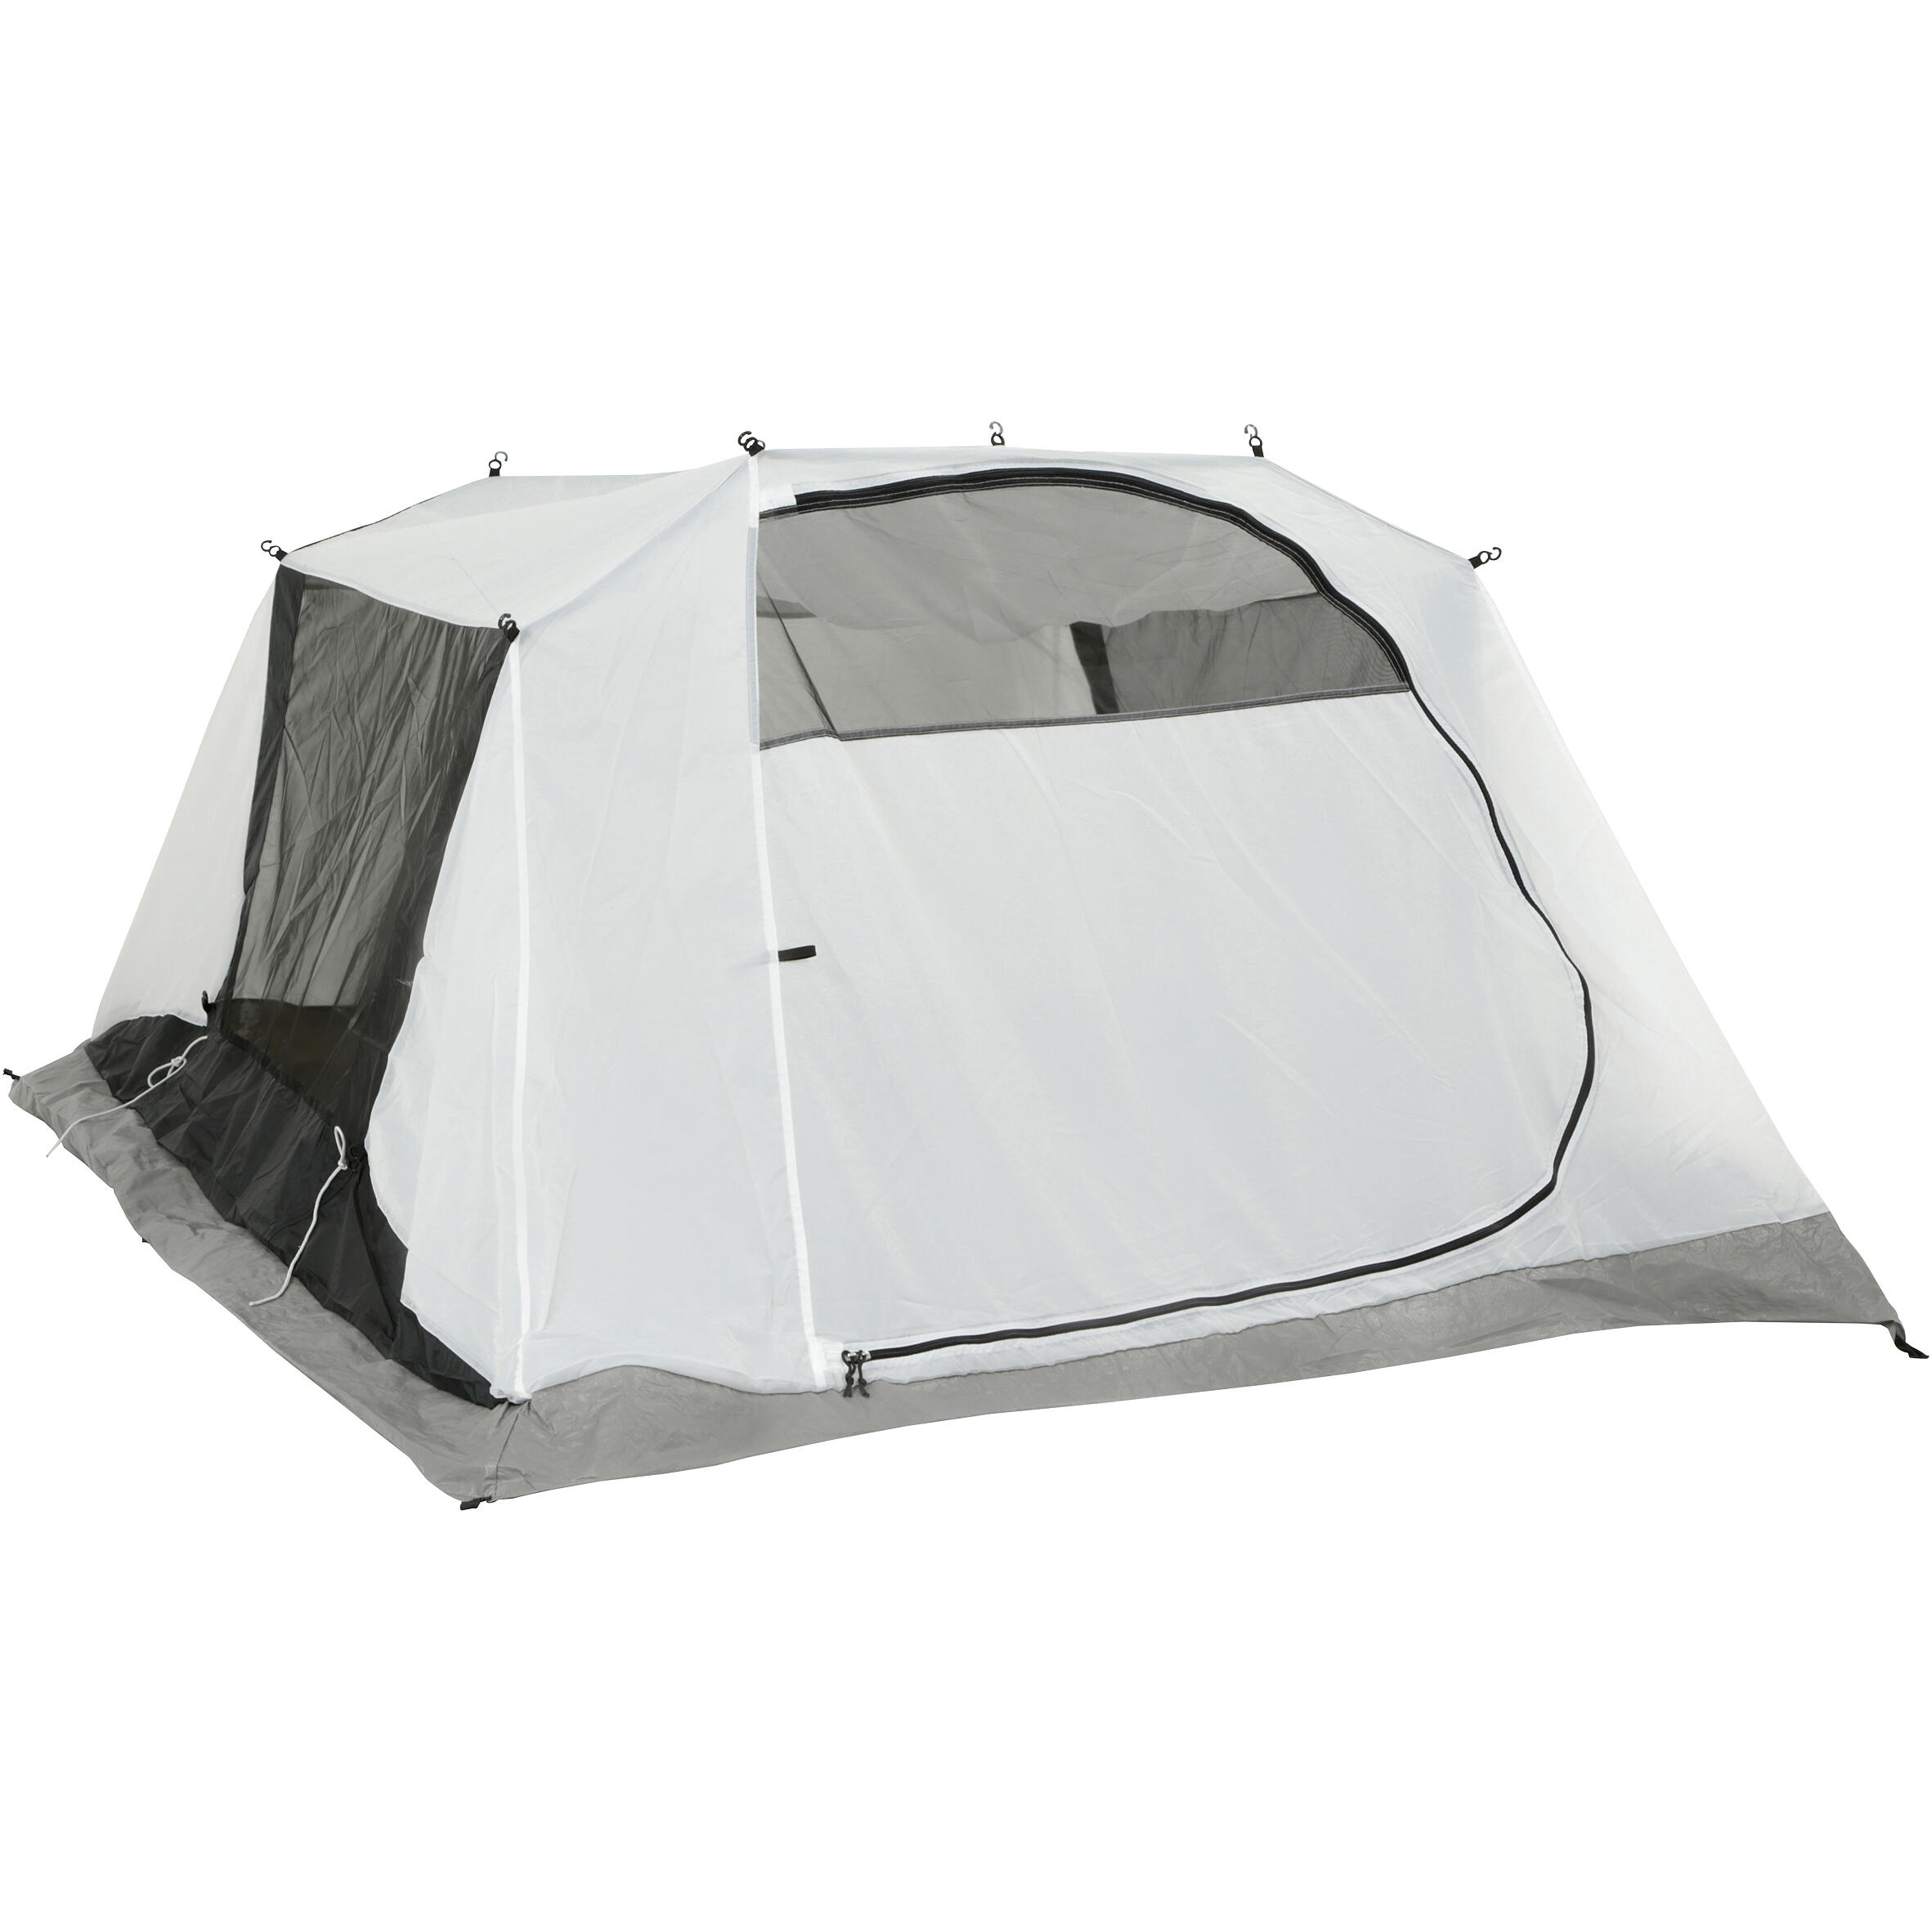 decathlon base tent